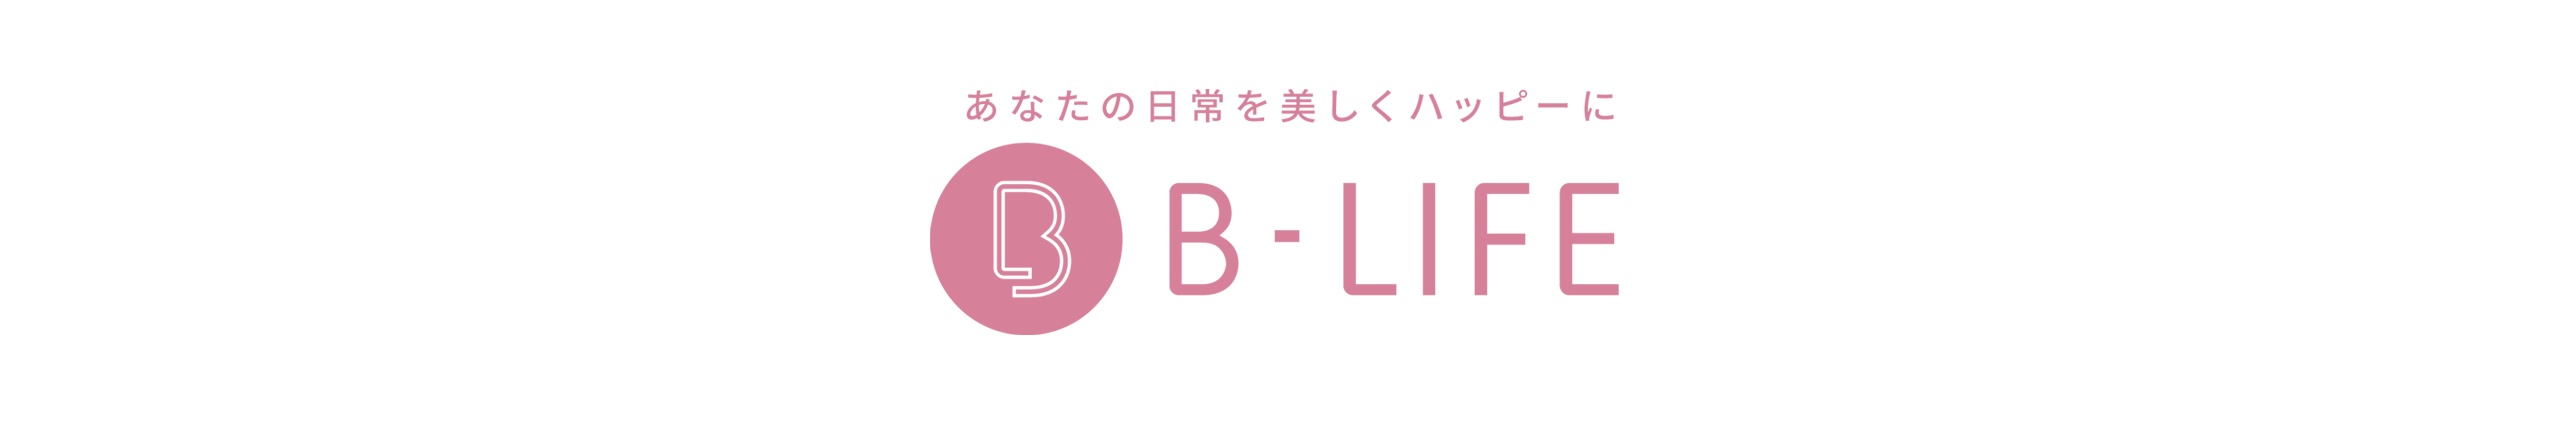 B-life